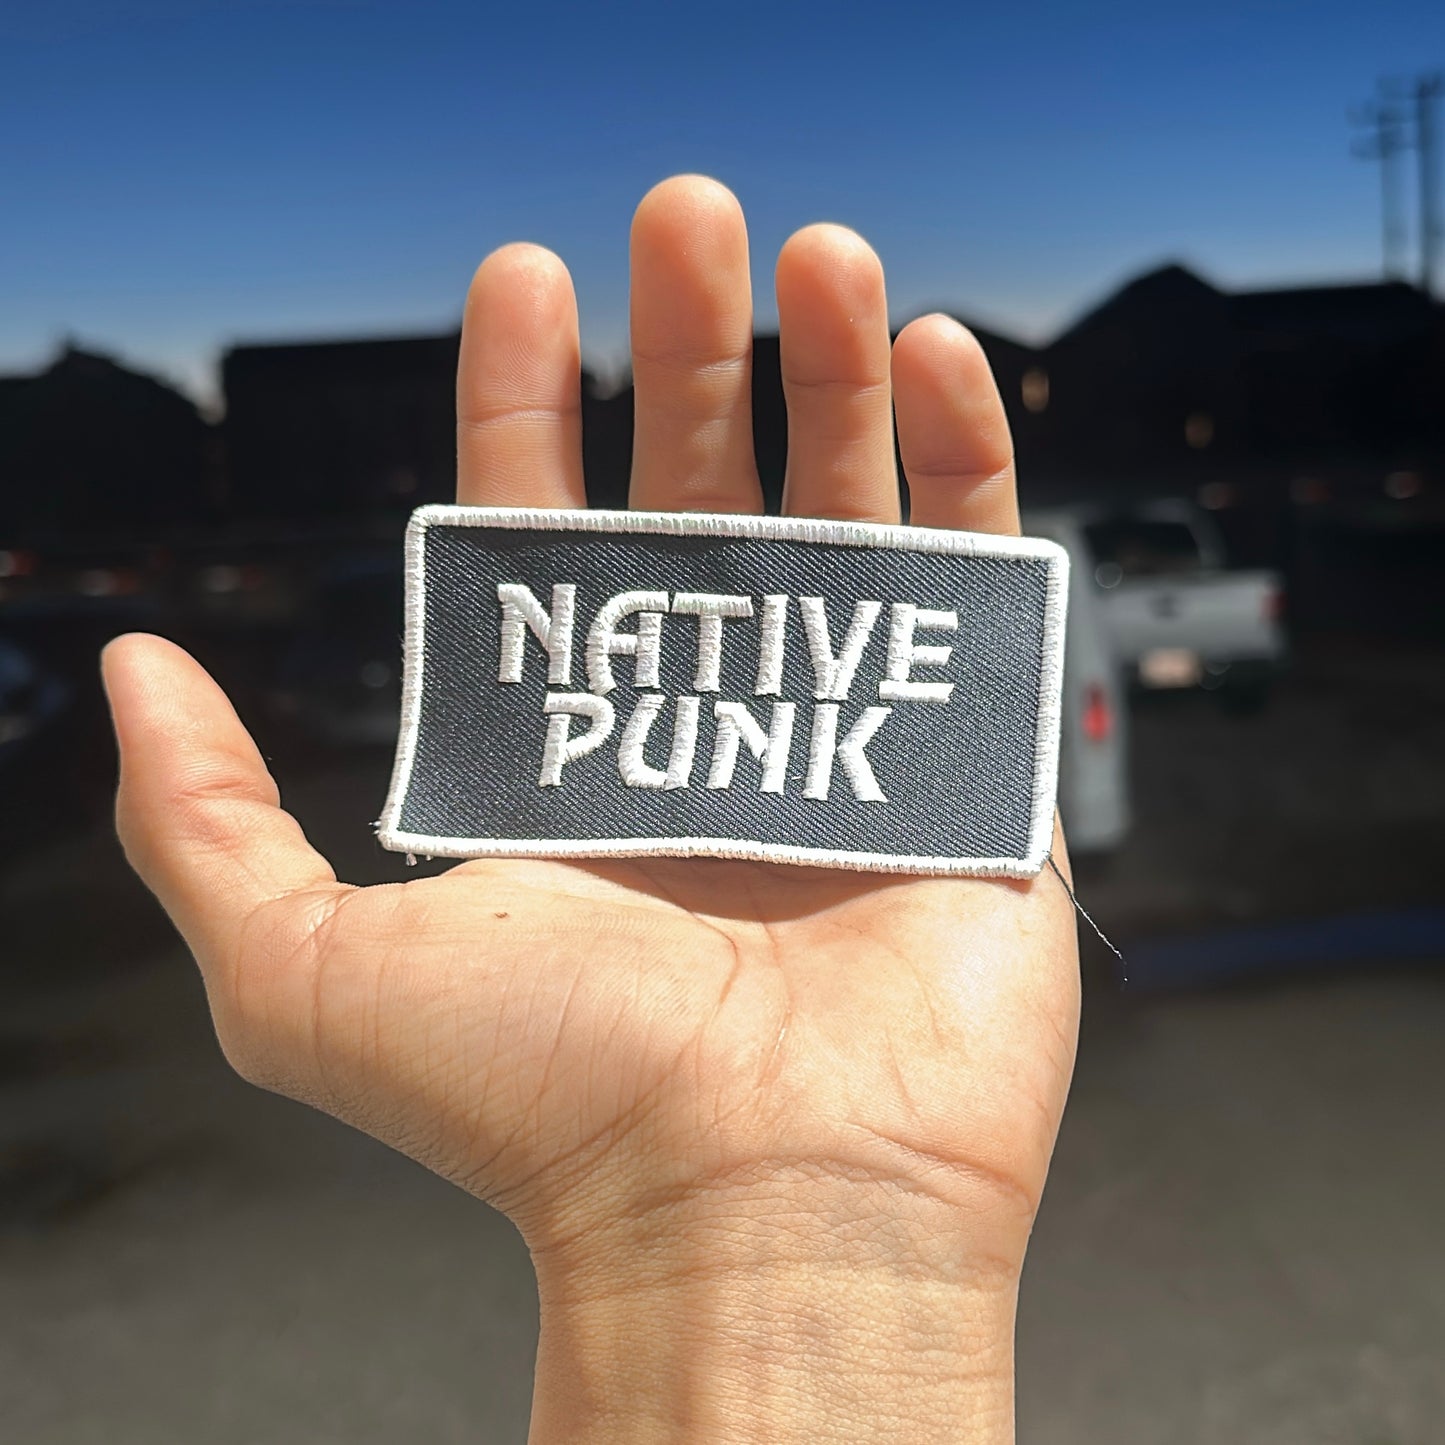 Native punk patch